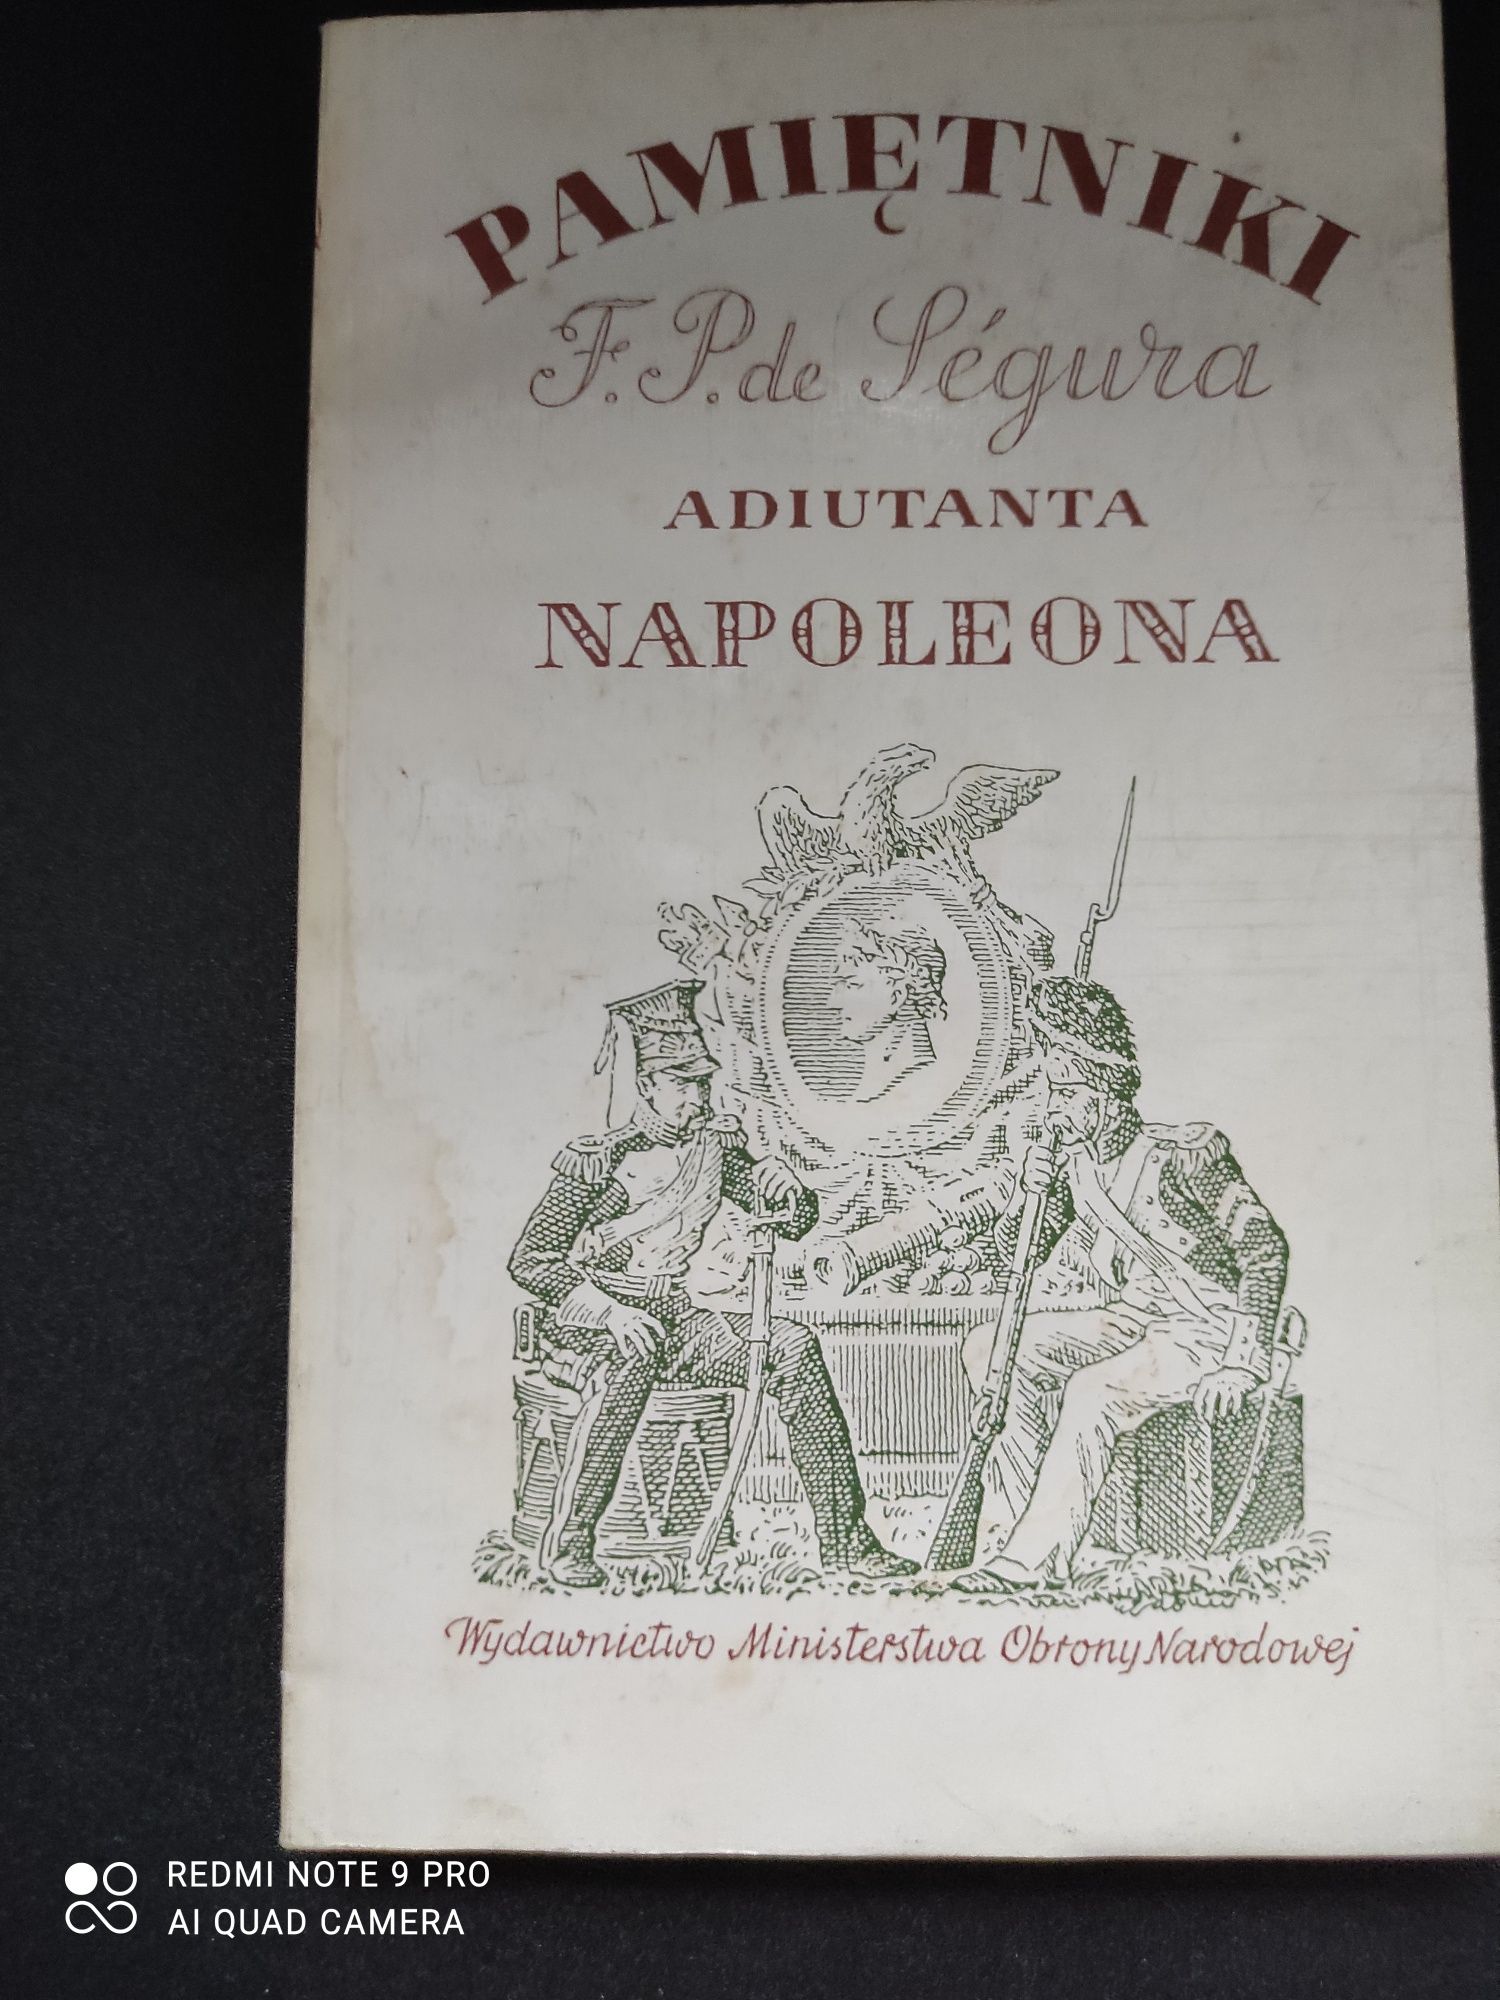 Pamiętniki Adiutanta Napoleona książka